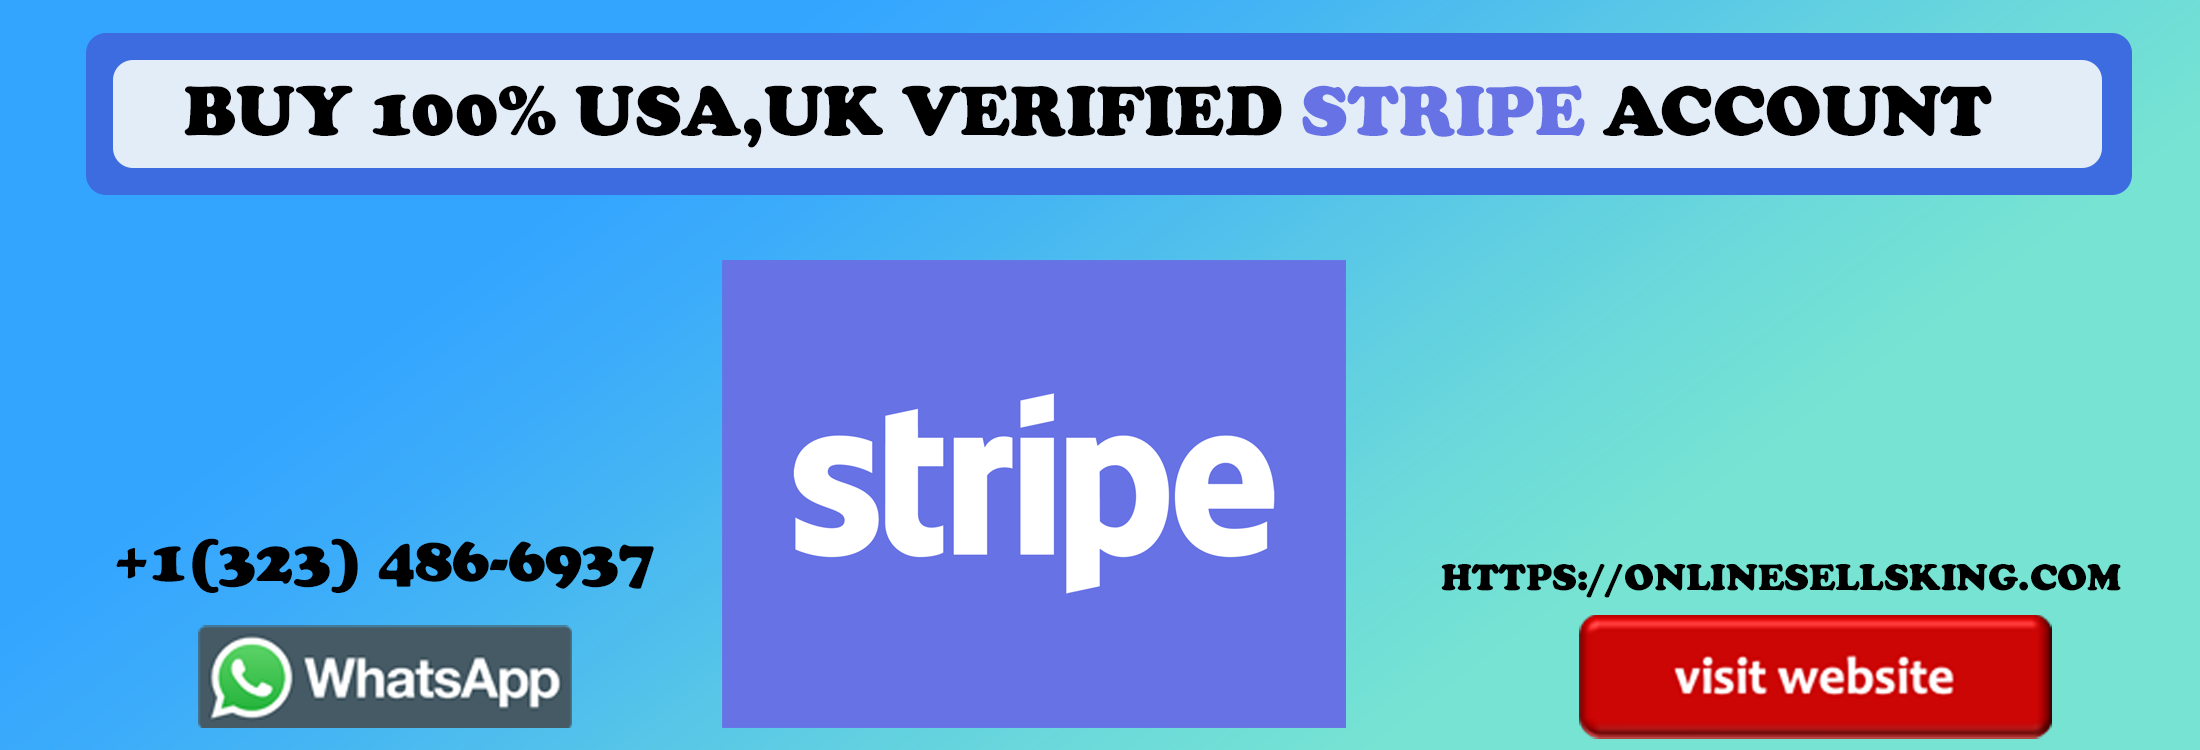 Buy Verified Stripe Account banner 2